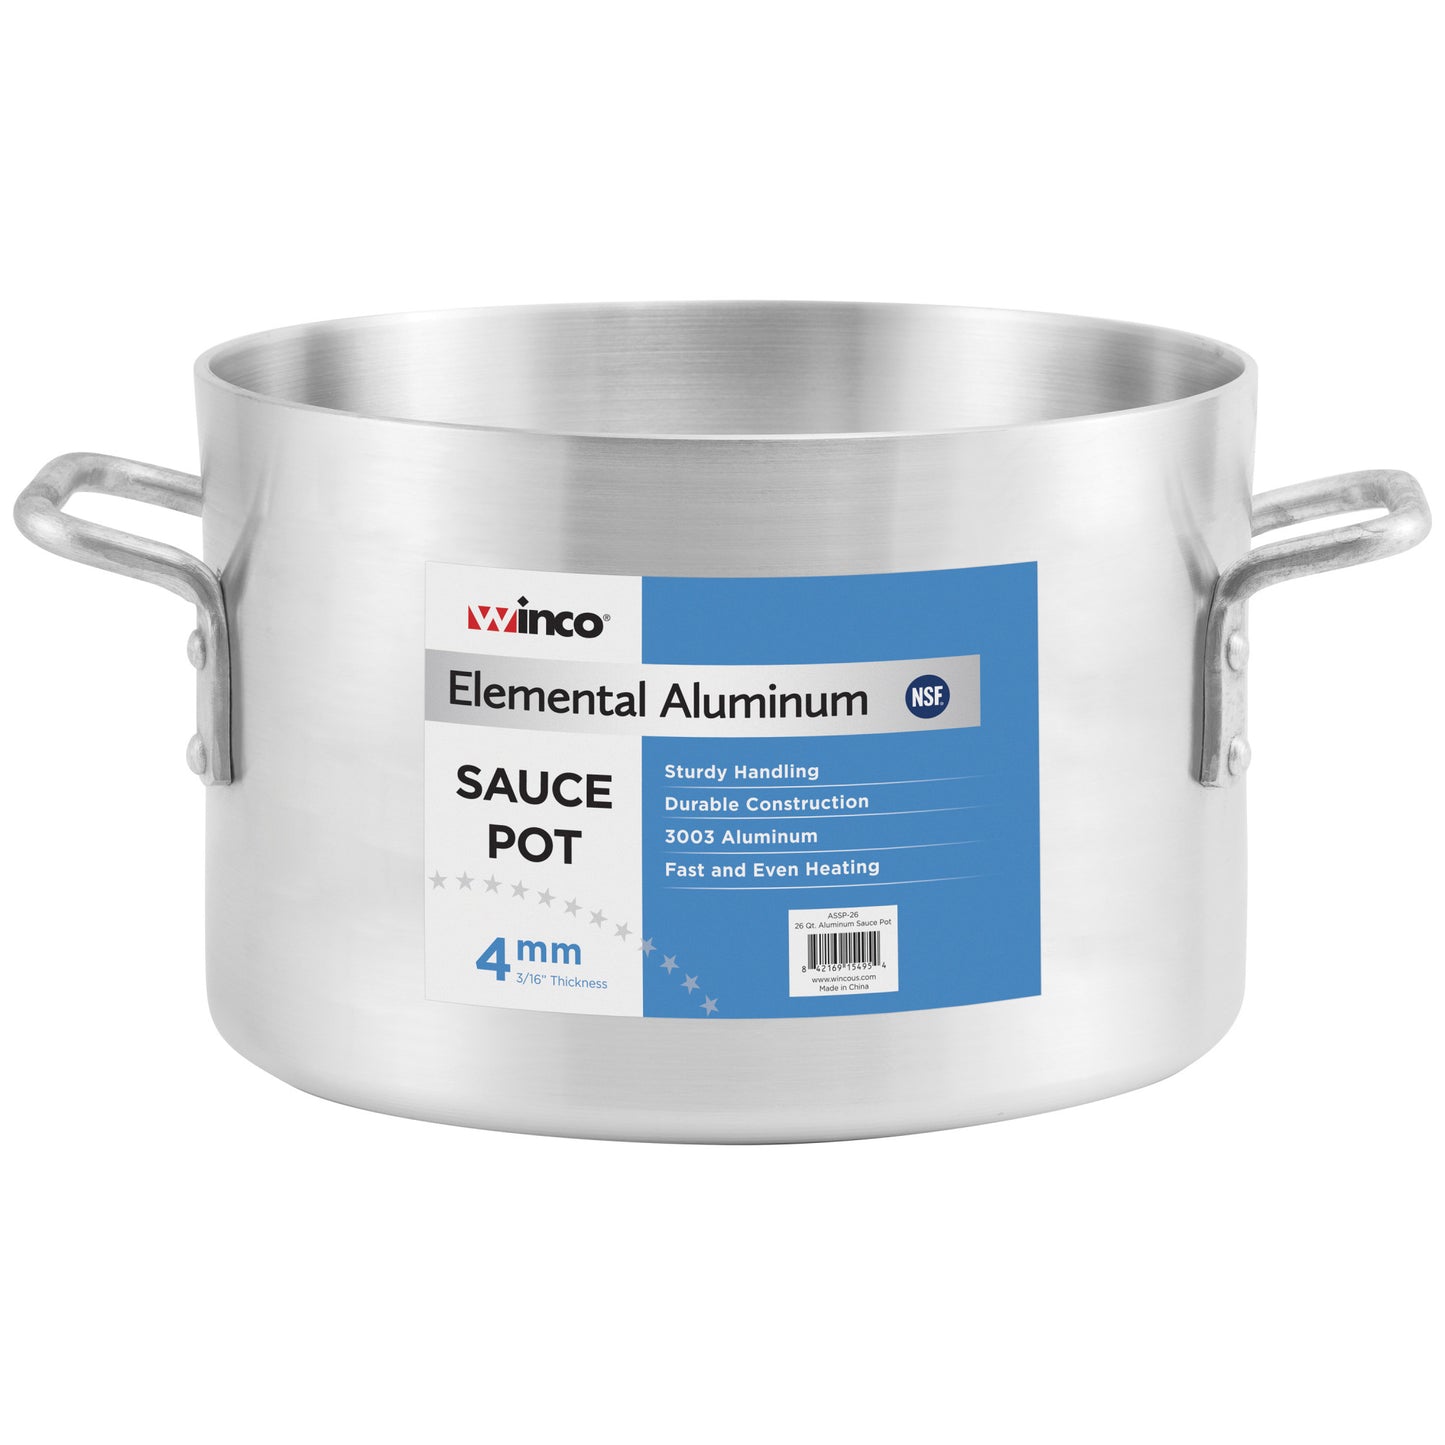 ASSP-34 - Elemental Aluminum, 34 Qt Sauce Pot, 4mm